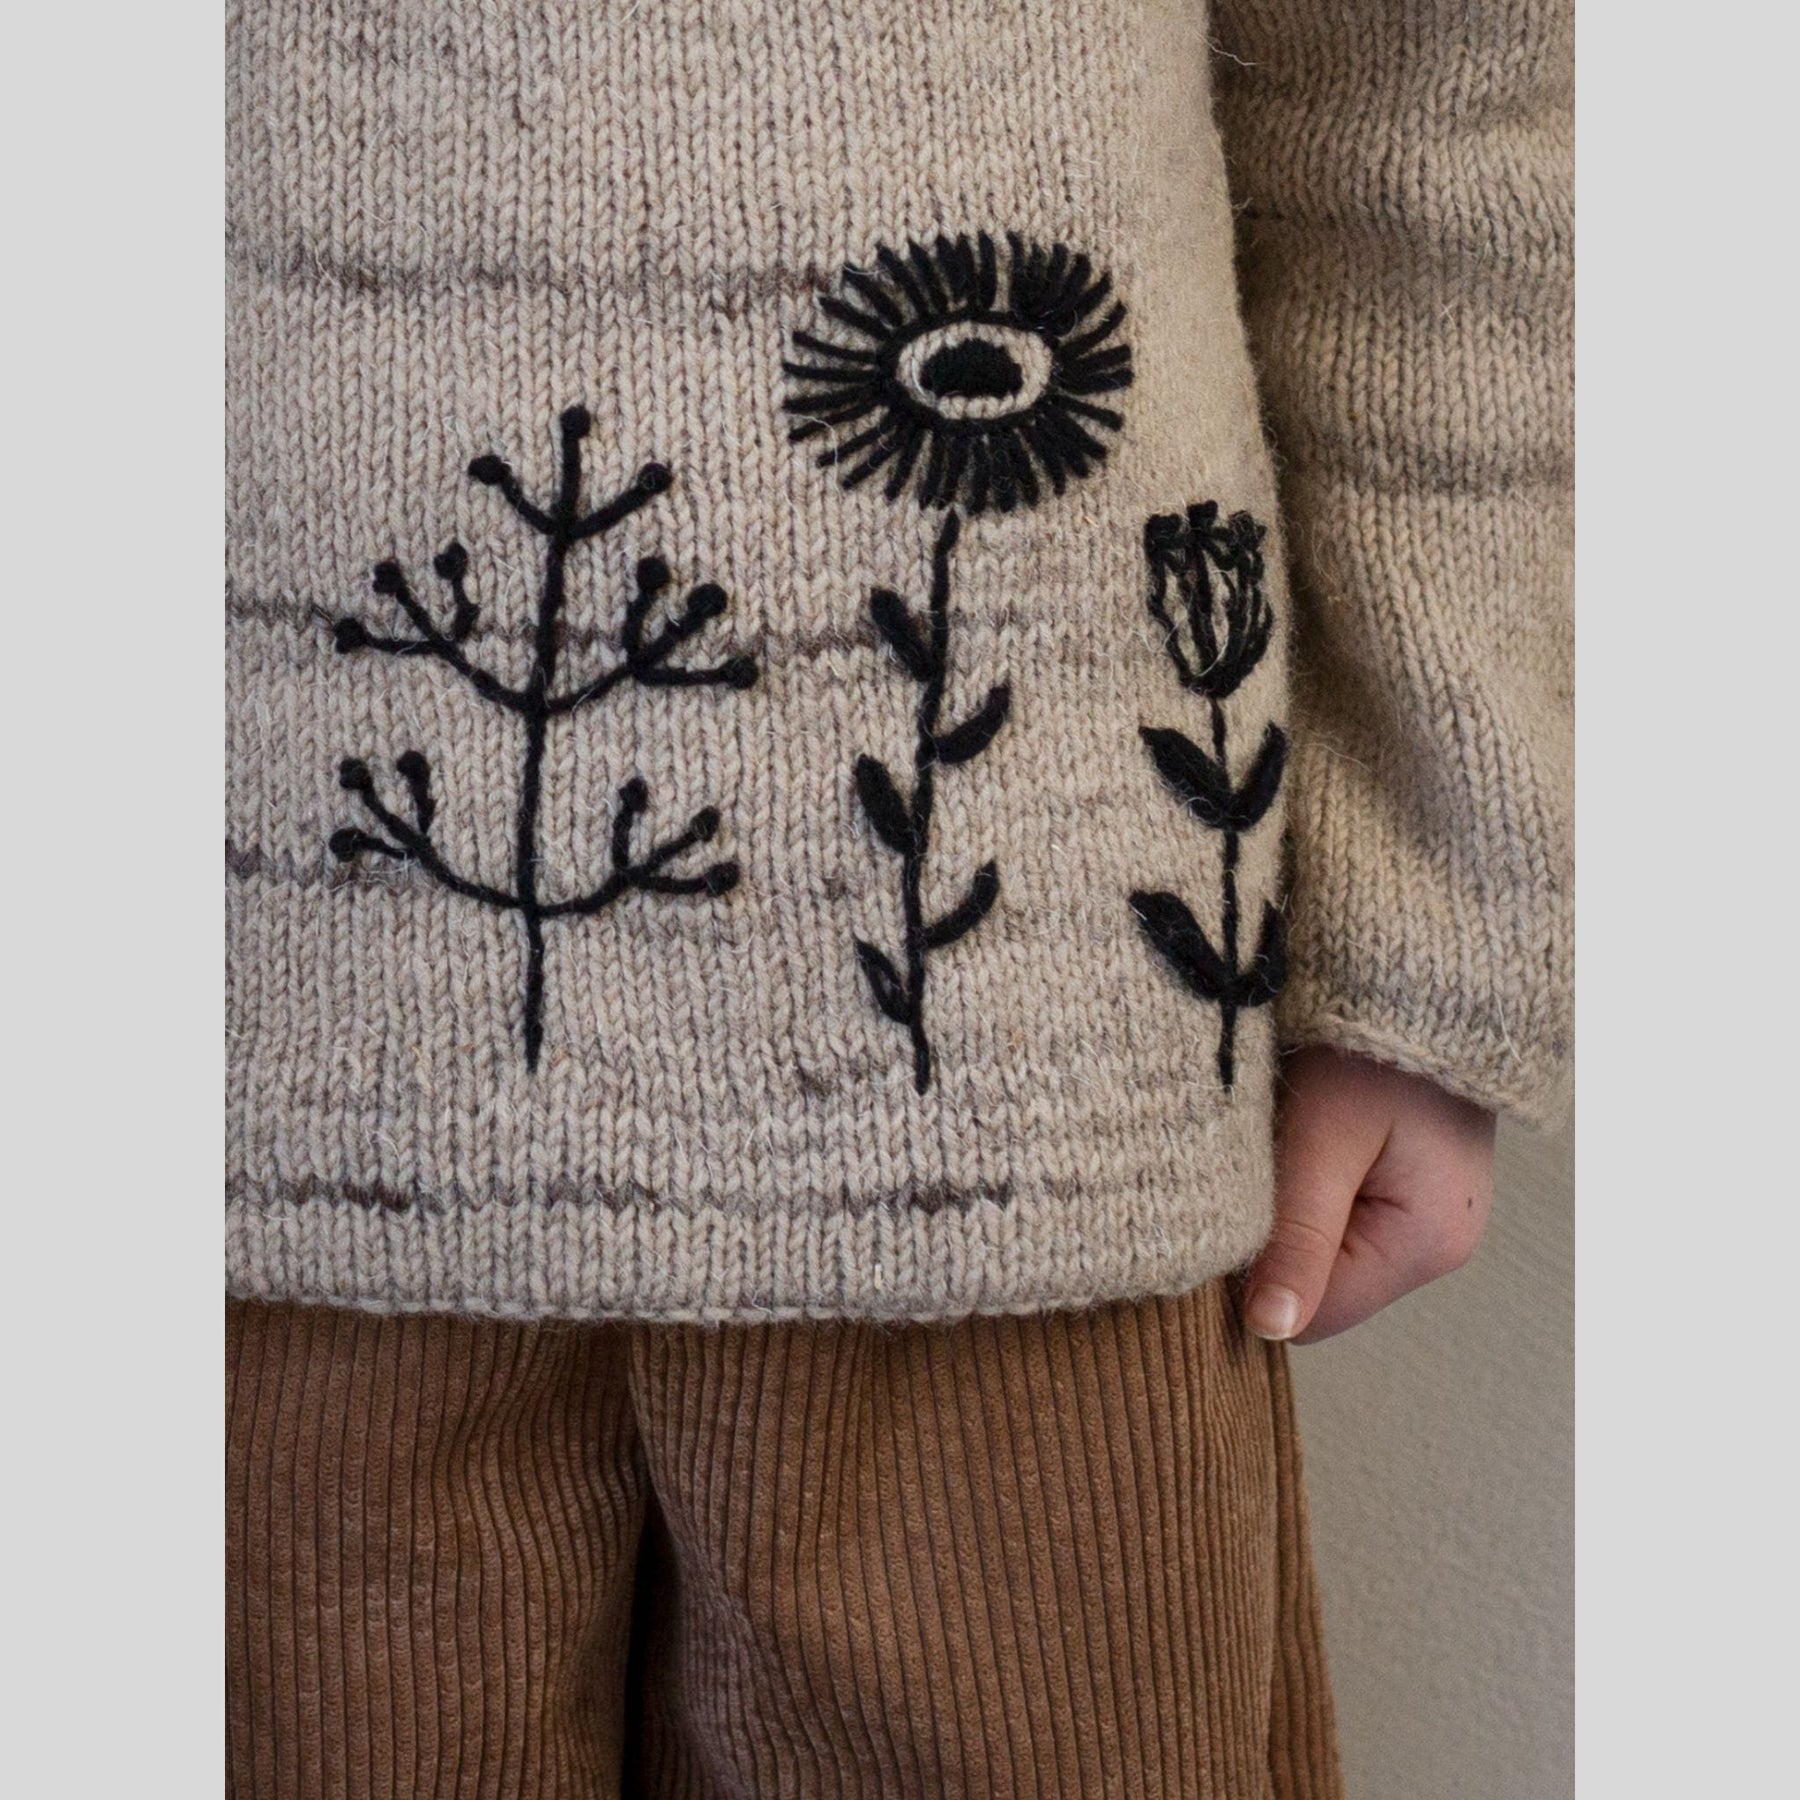 Embroidery on Knits, Judit Gummlich